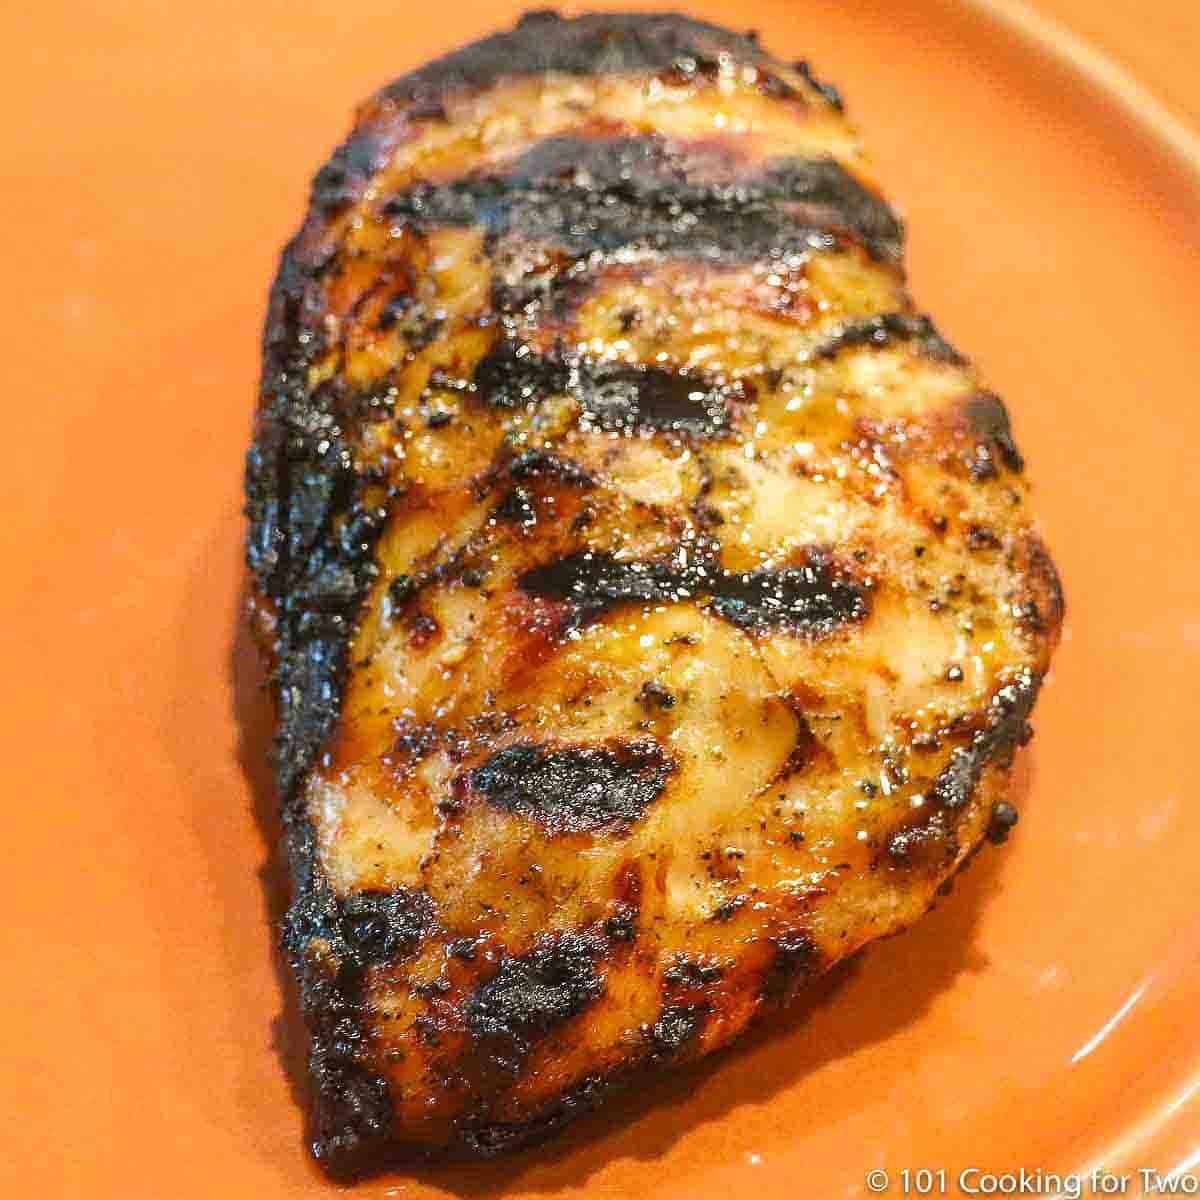 grilled chicken breast on an orange plate.